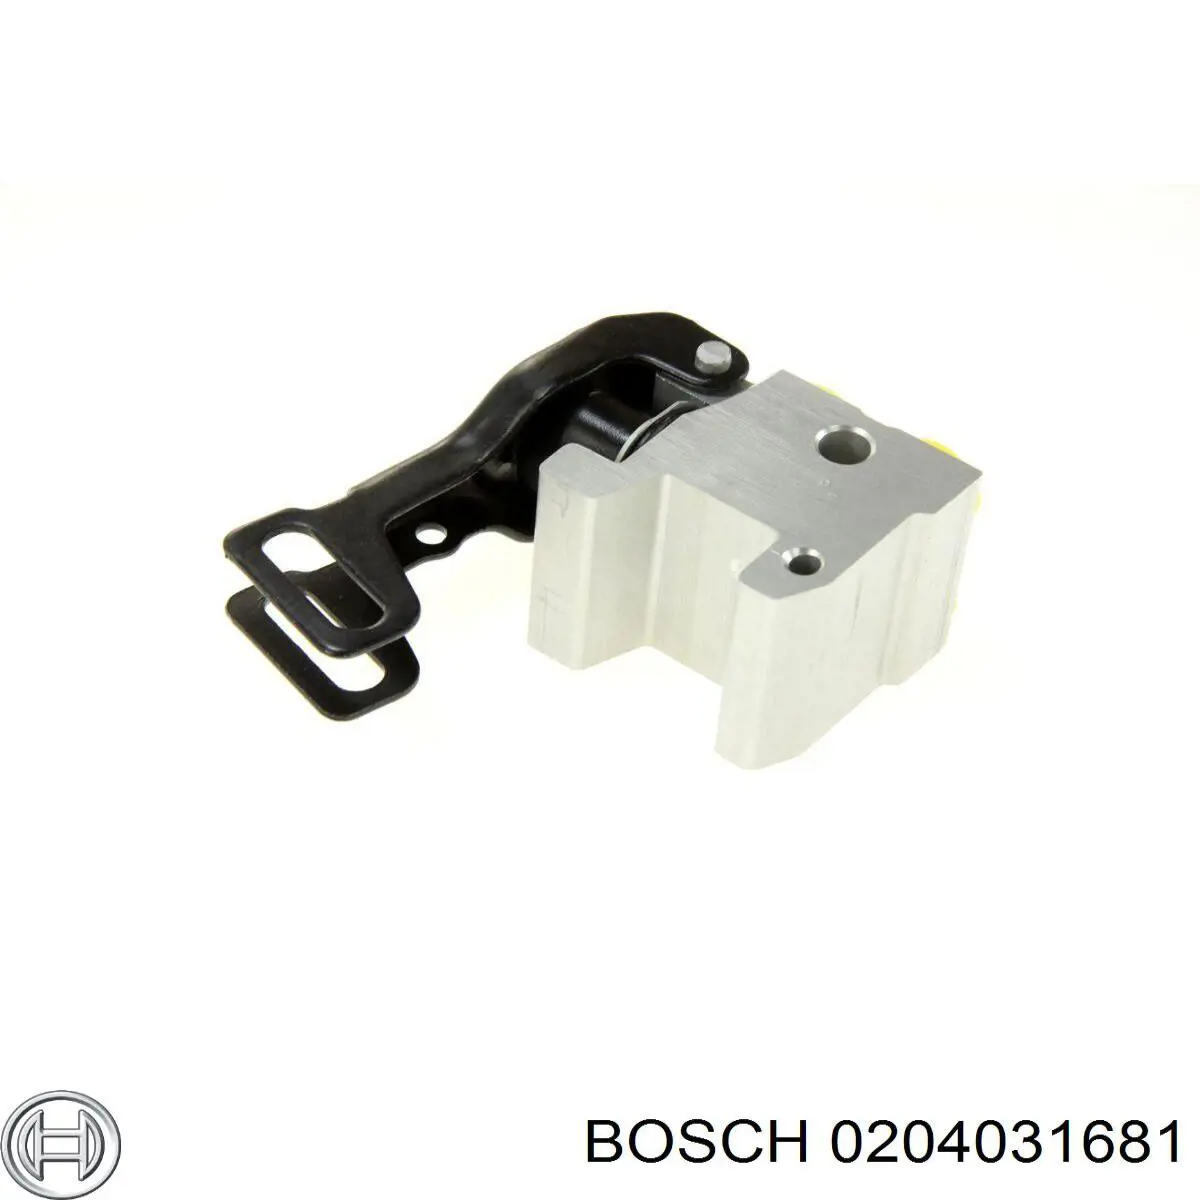 Регулятор давления тормозов (регулятор тормозных сил) Bosch 0204031681